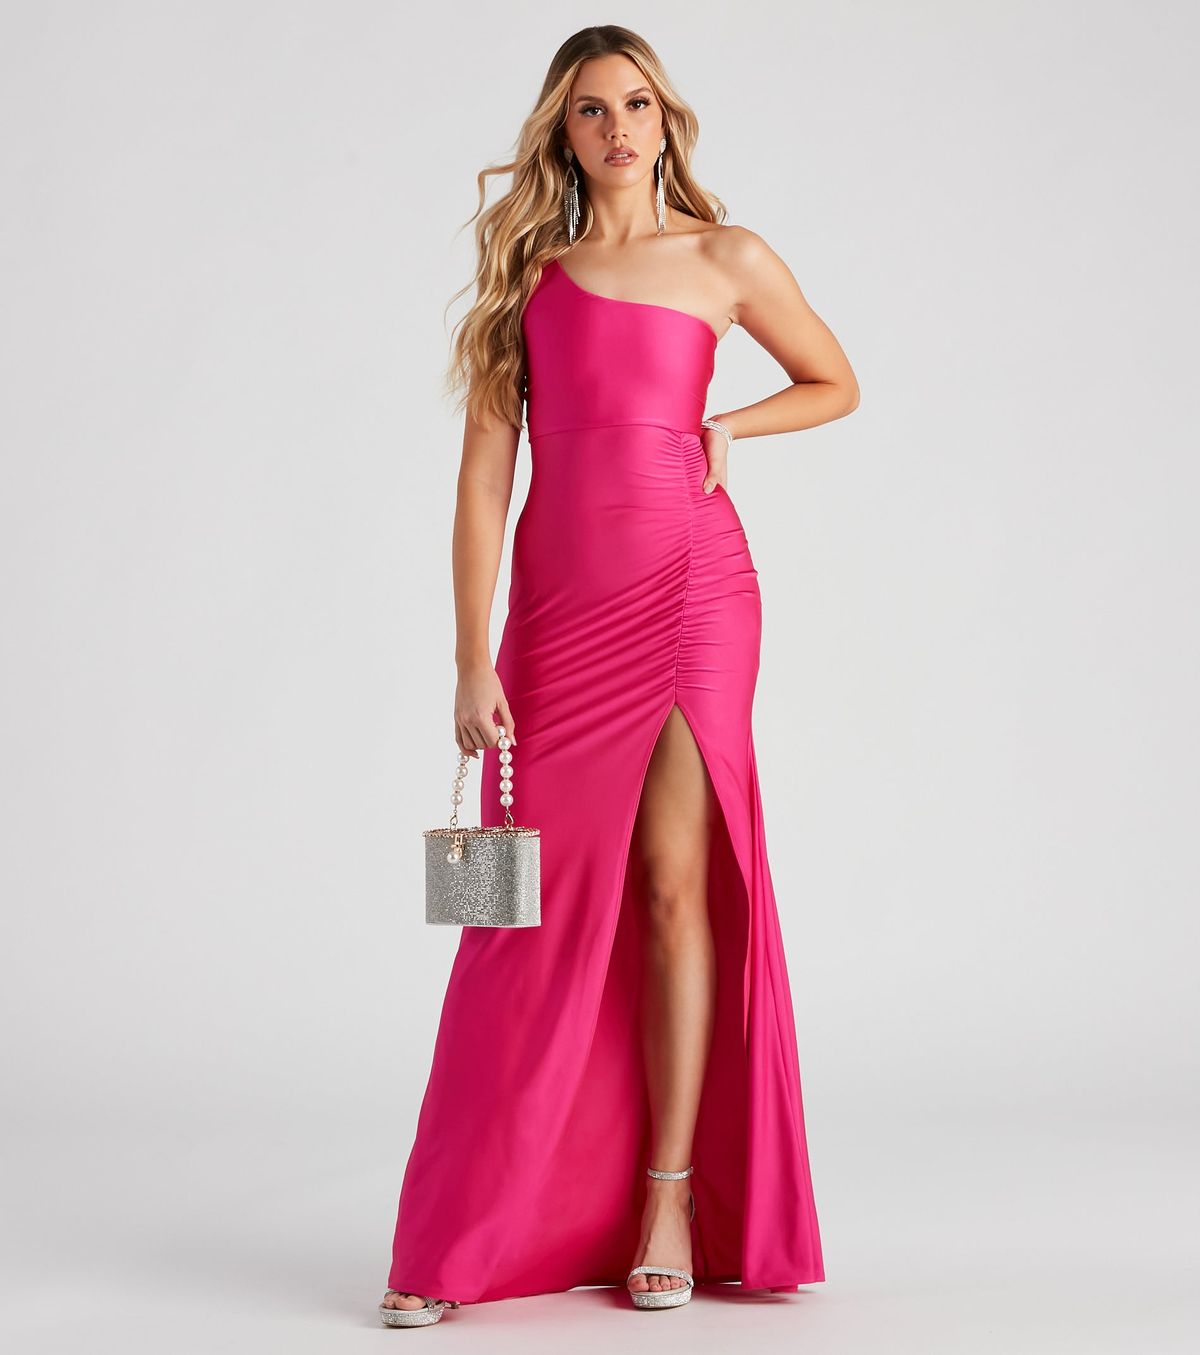 Style 05002-3402 Windsor Size S Bridesmaid One Shoulder Sequined Pink Side Slit Dress on Queenly